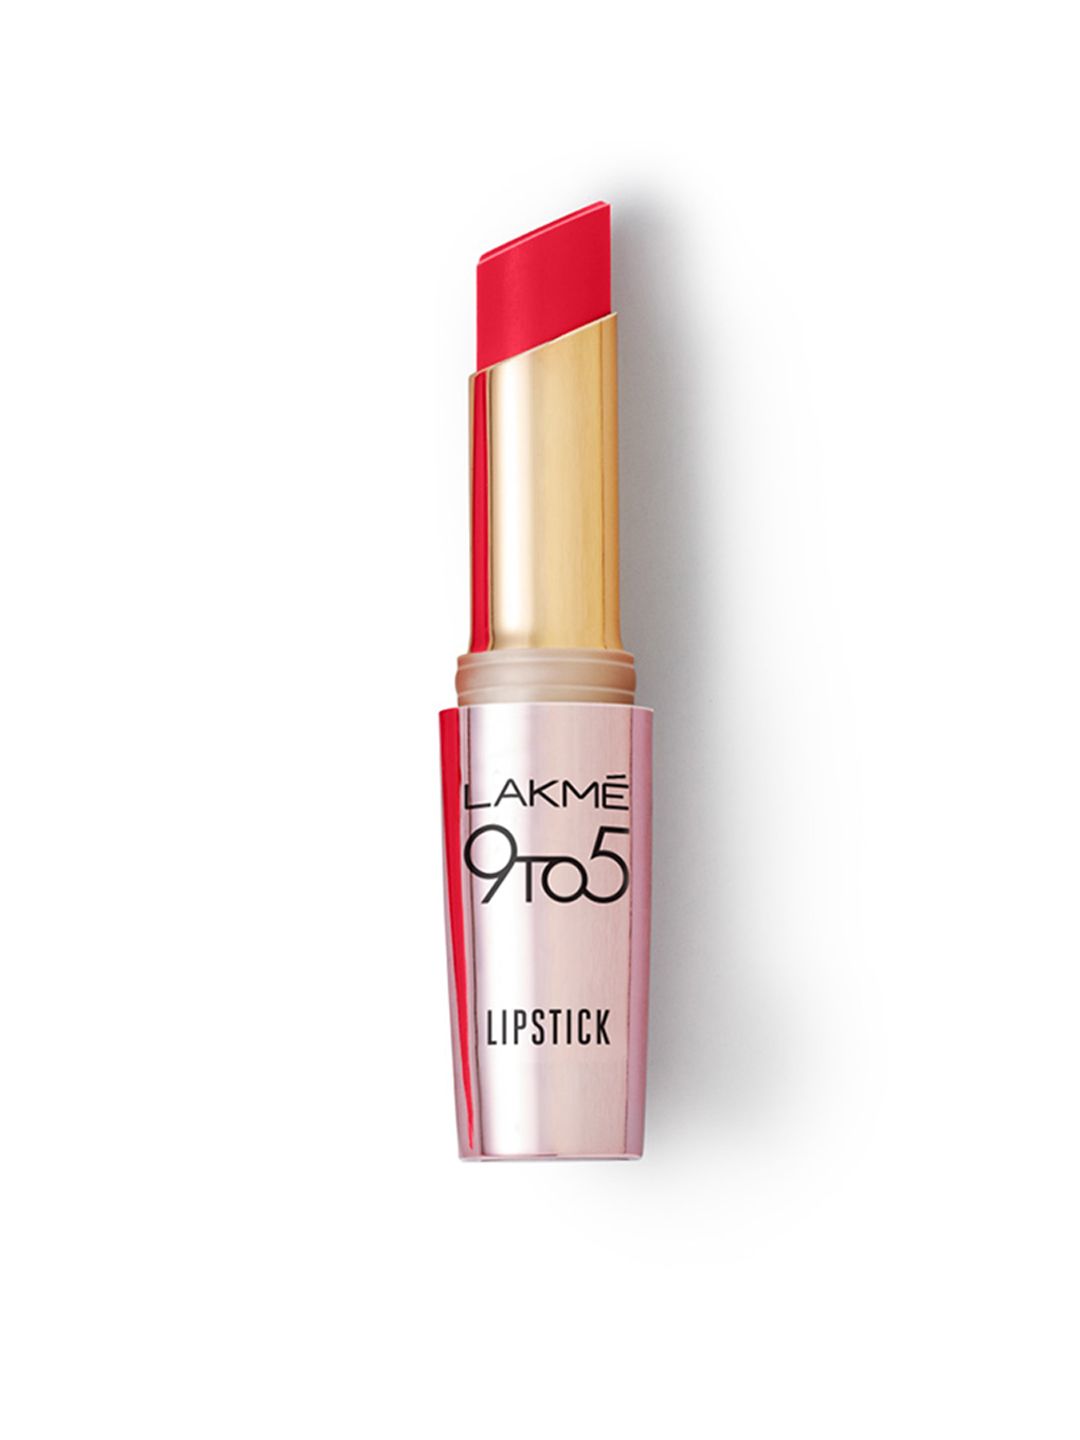 Lakme 9to5 Primer + Matte Lipstick - Red Letter MR1 3.6 g Price in India